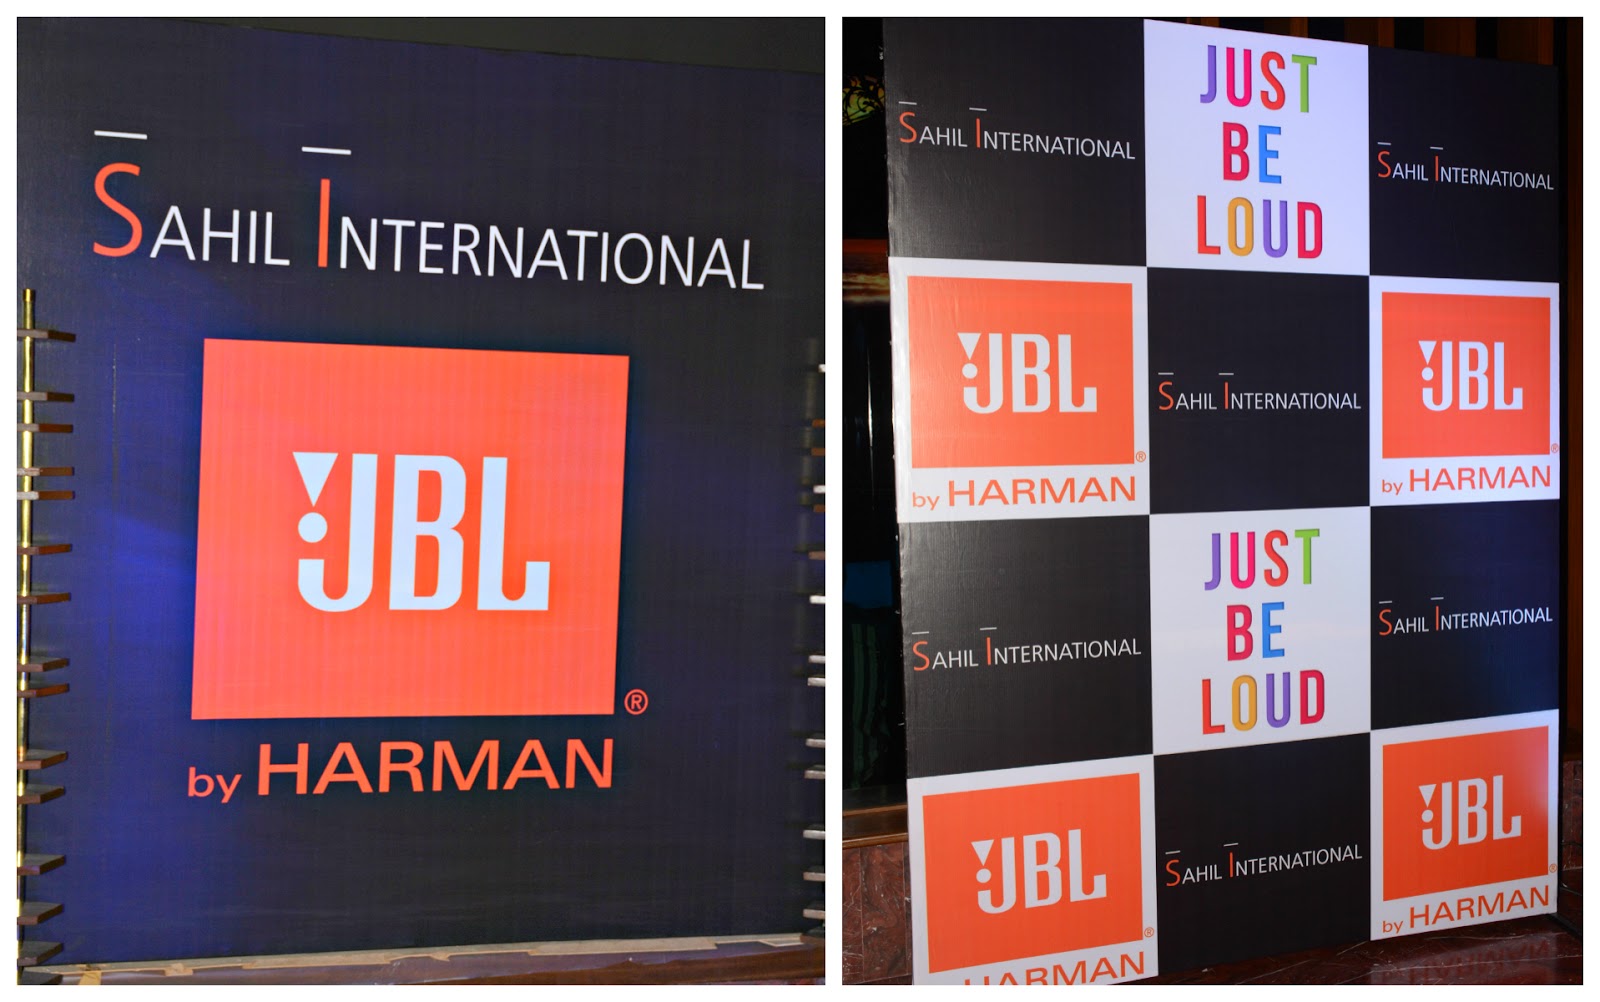 Sahil International's JBl Just Be Loud Party